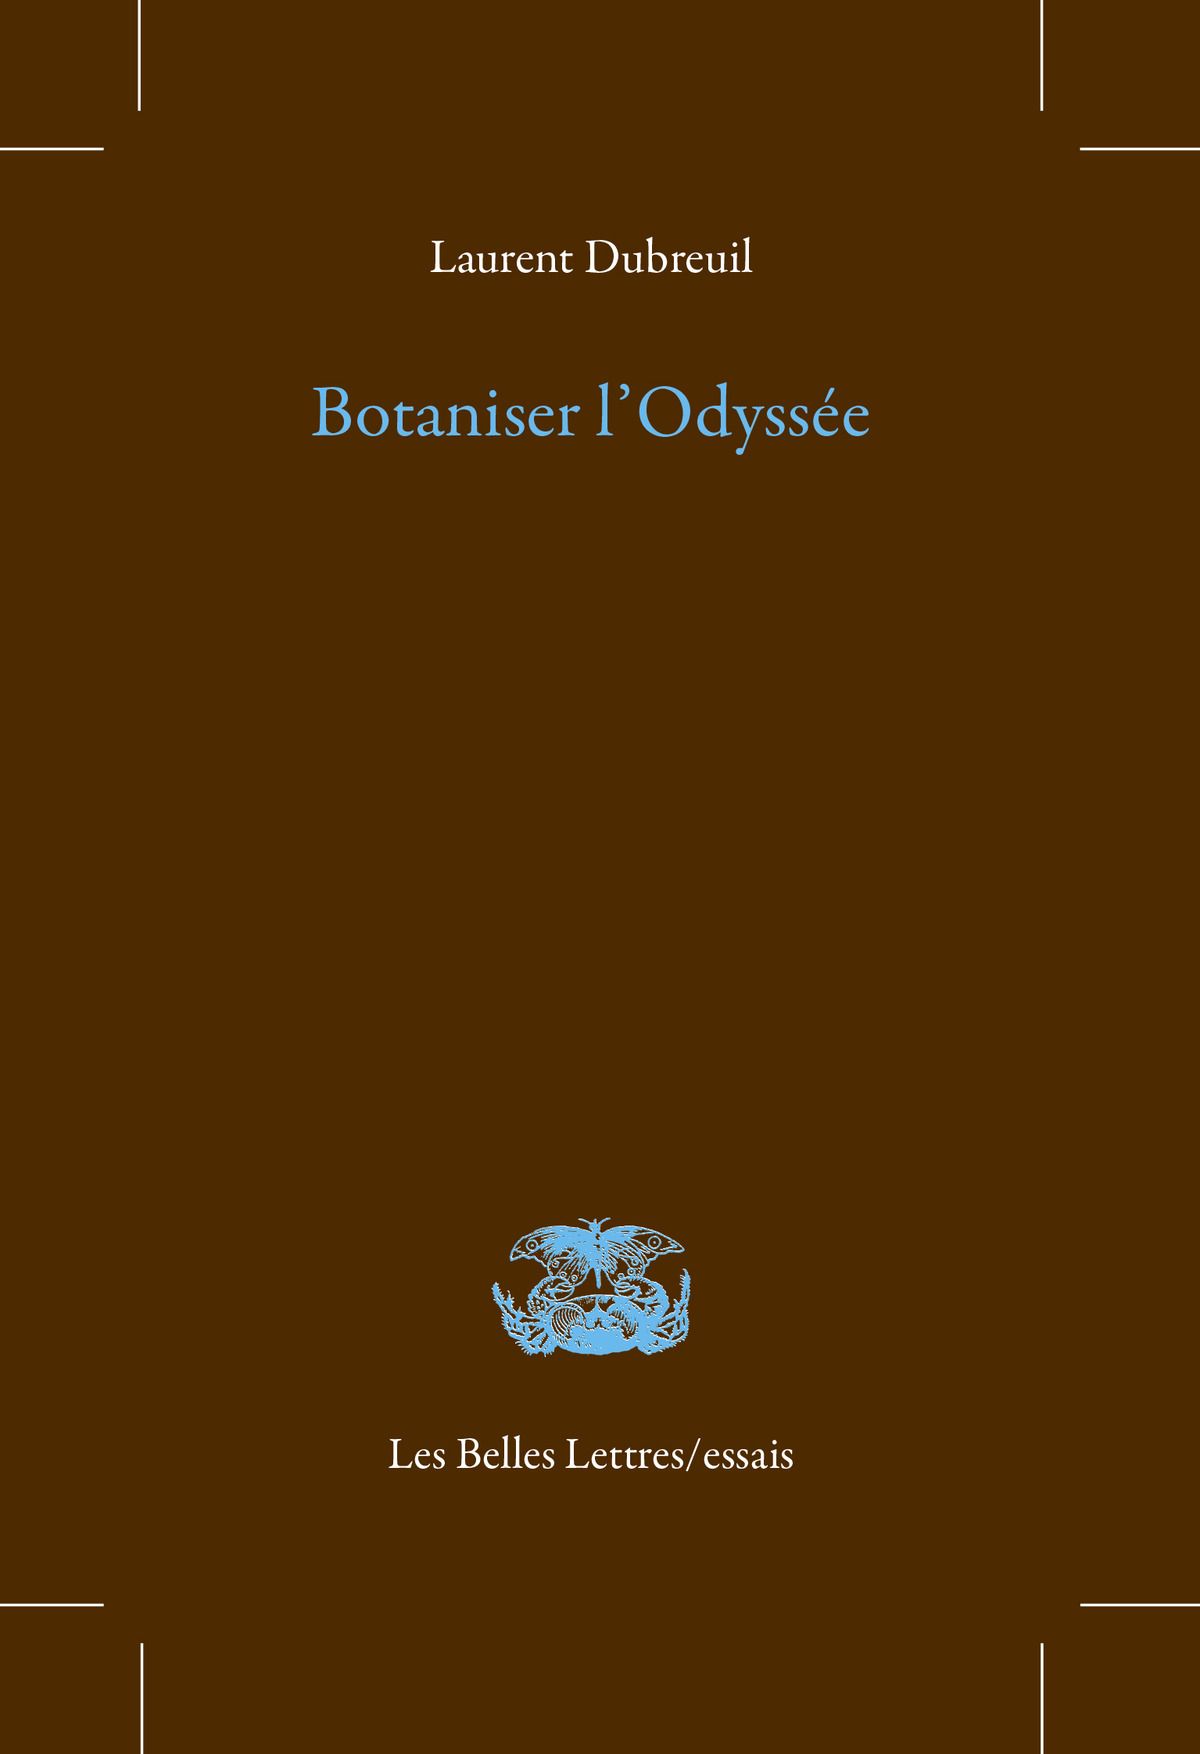 Laurent Dubreuil, Botaniser l'Odyssée